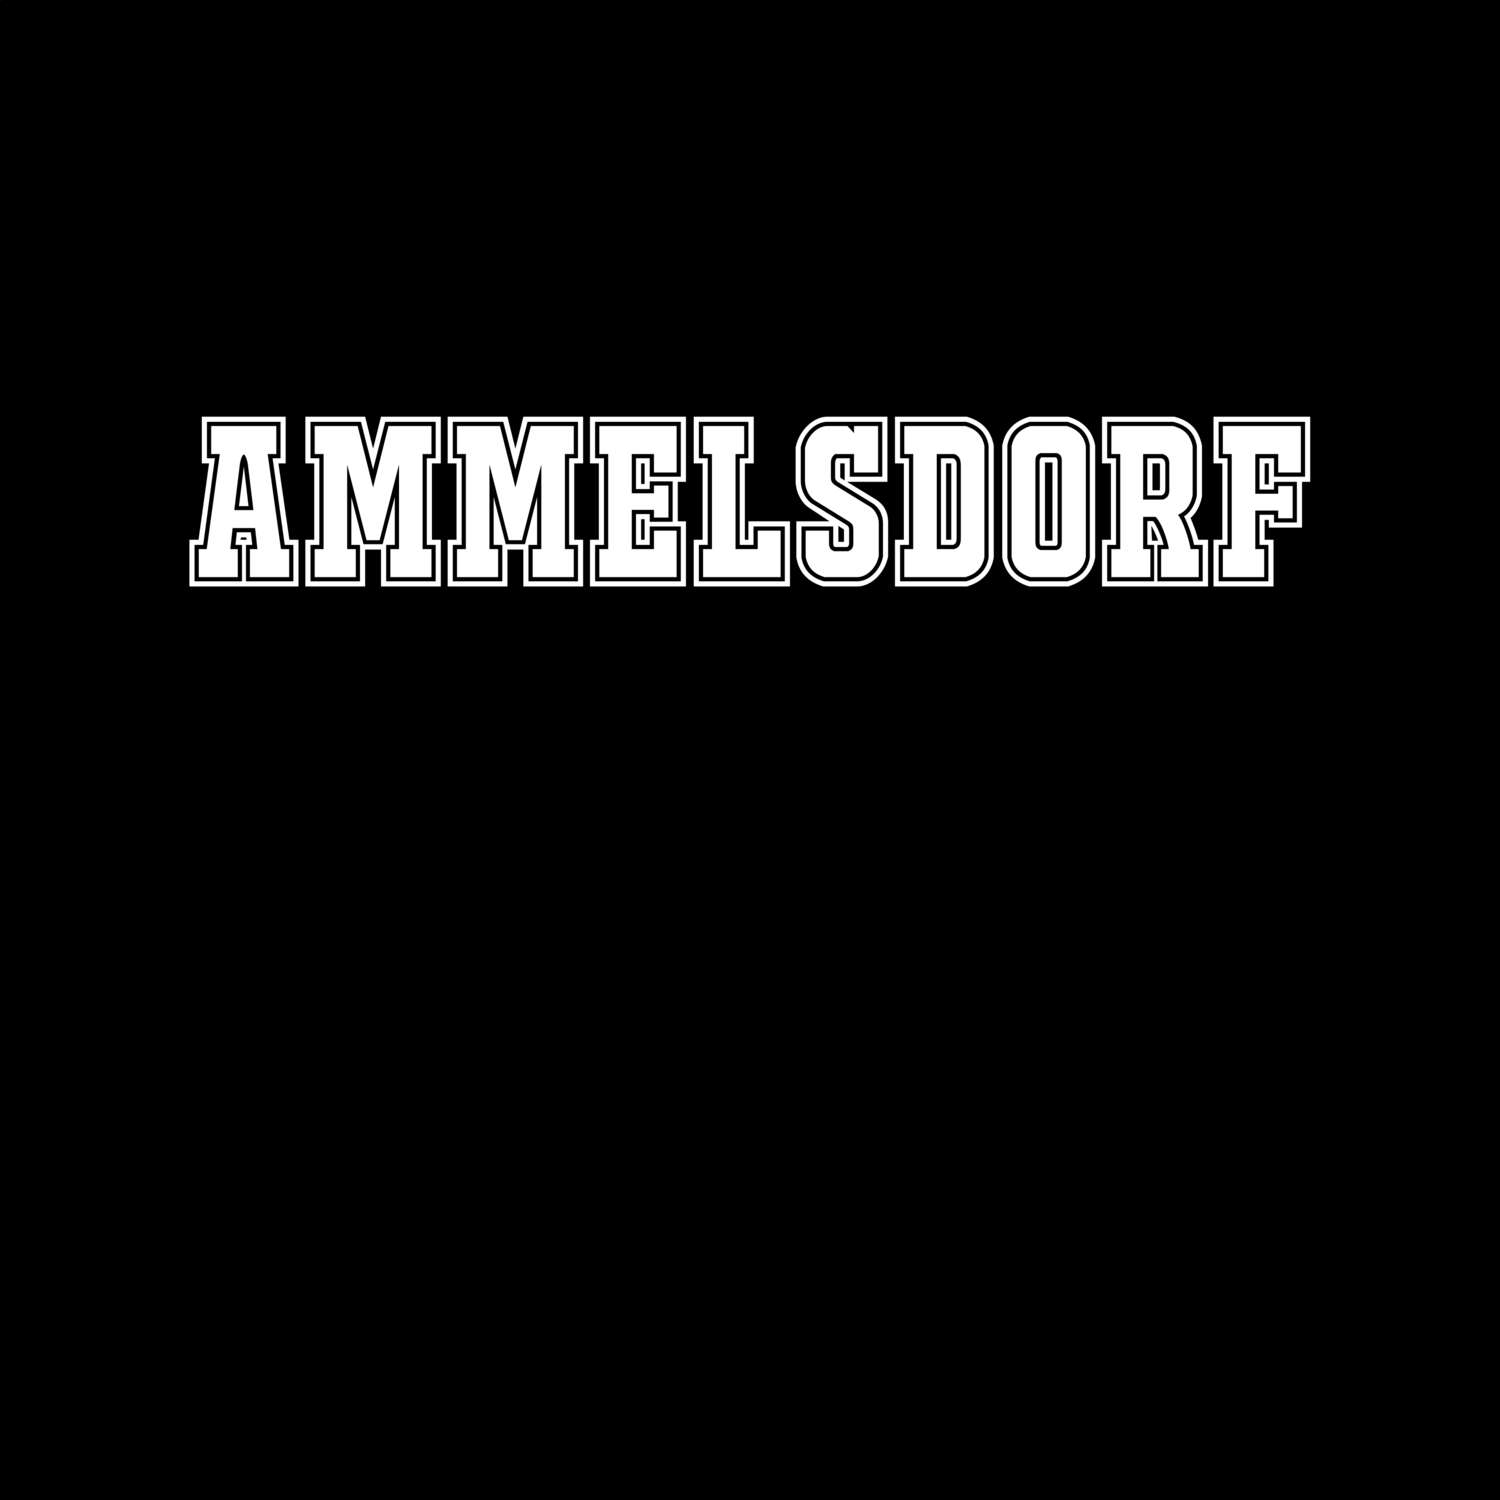 Ammelsdorf T-Shirt »Classic«